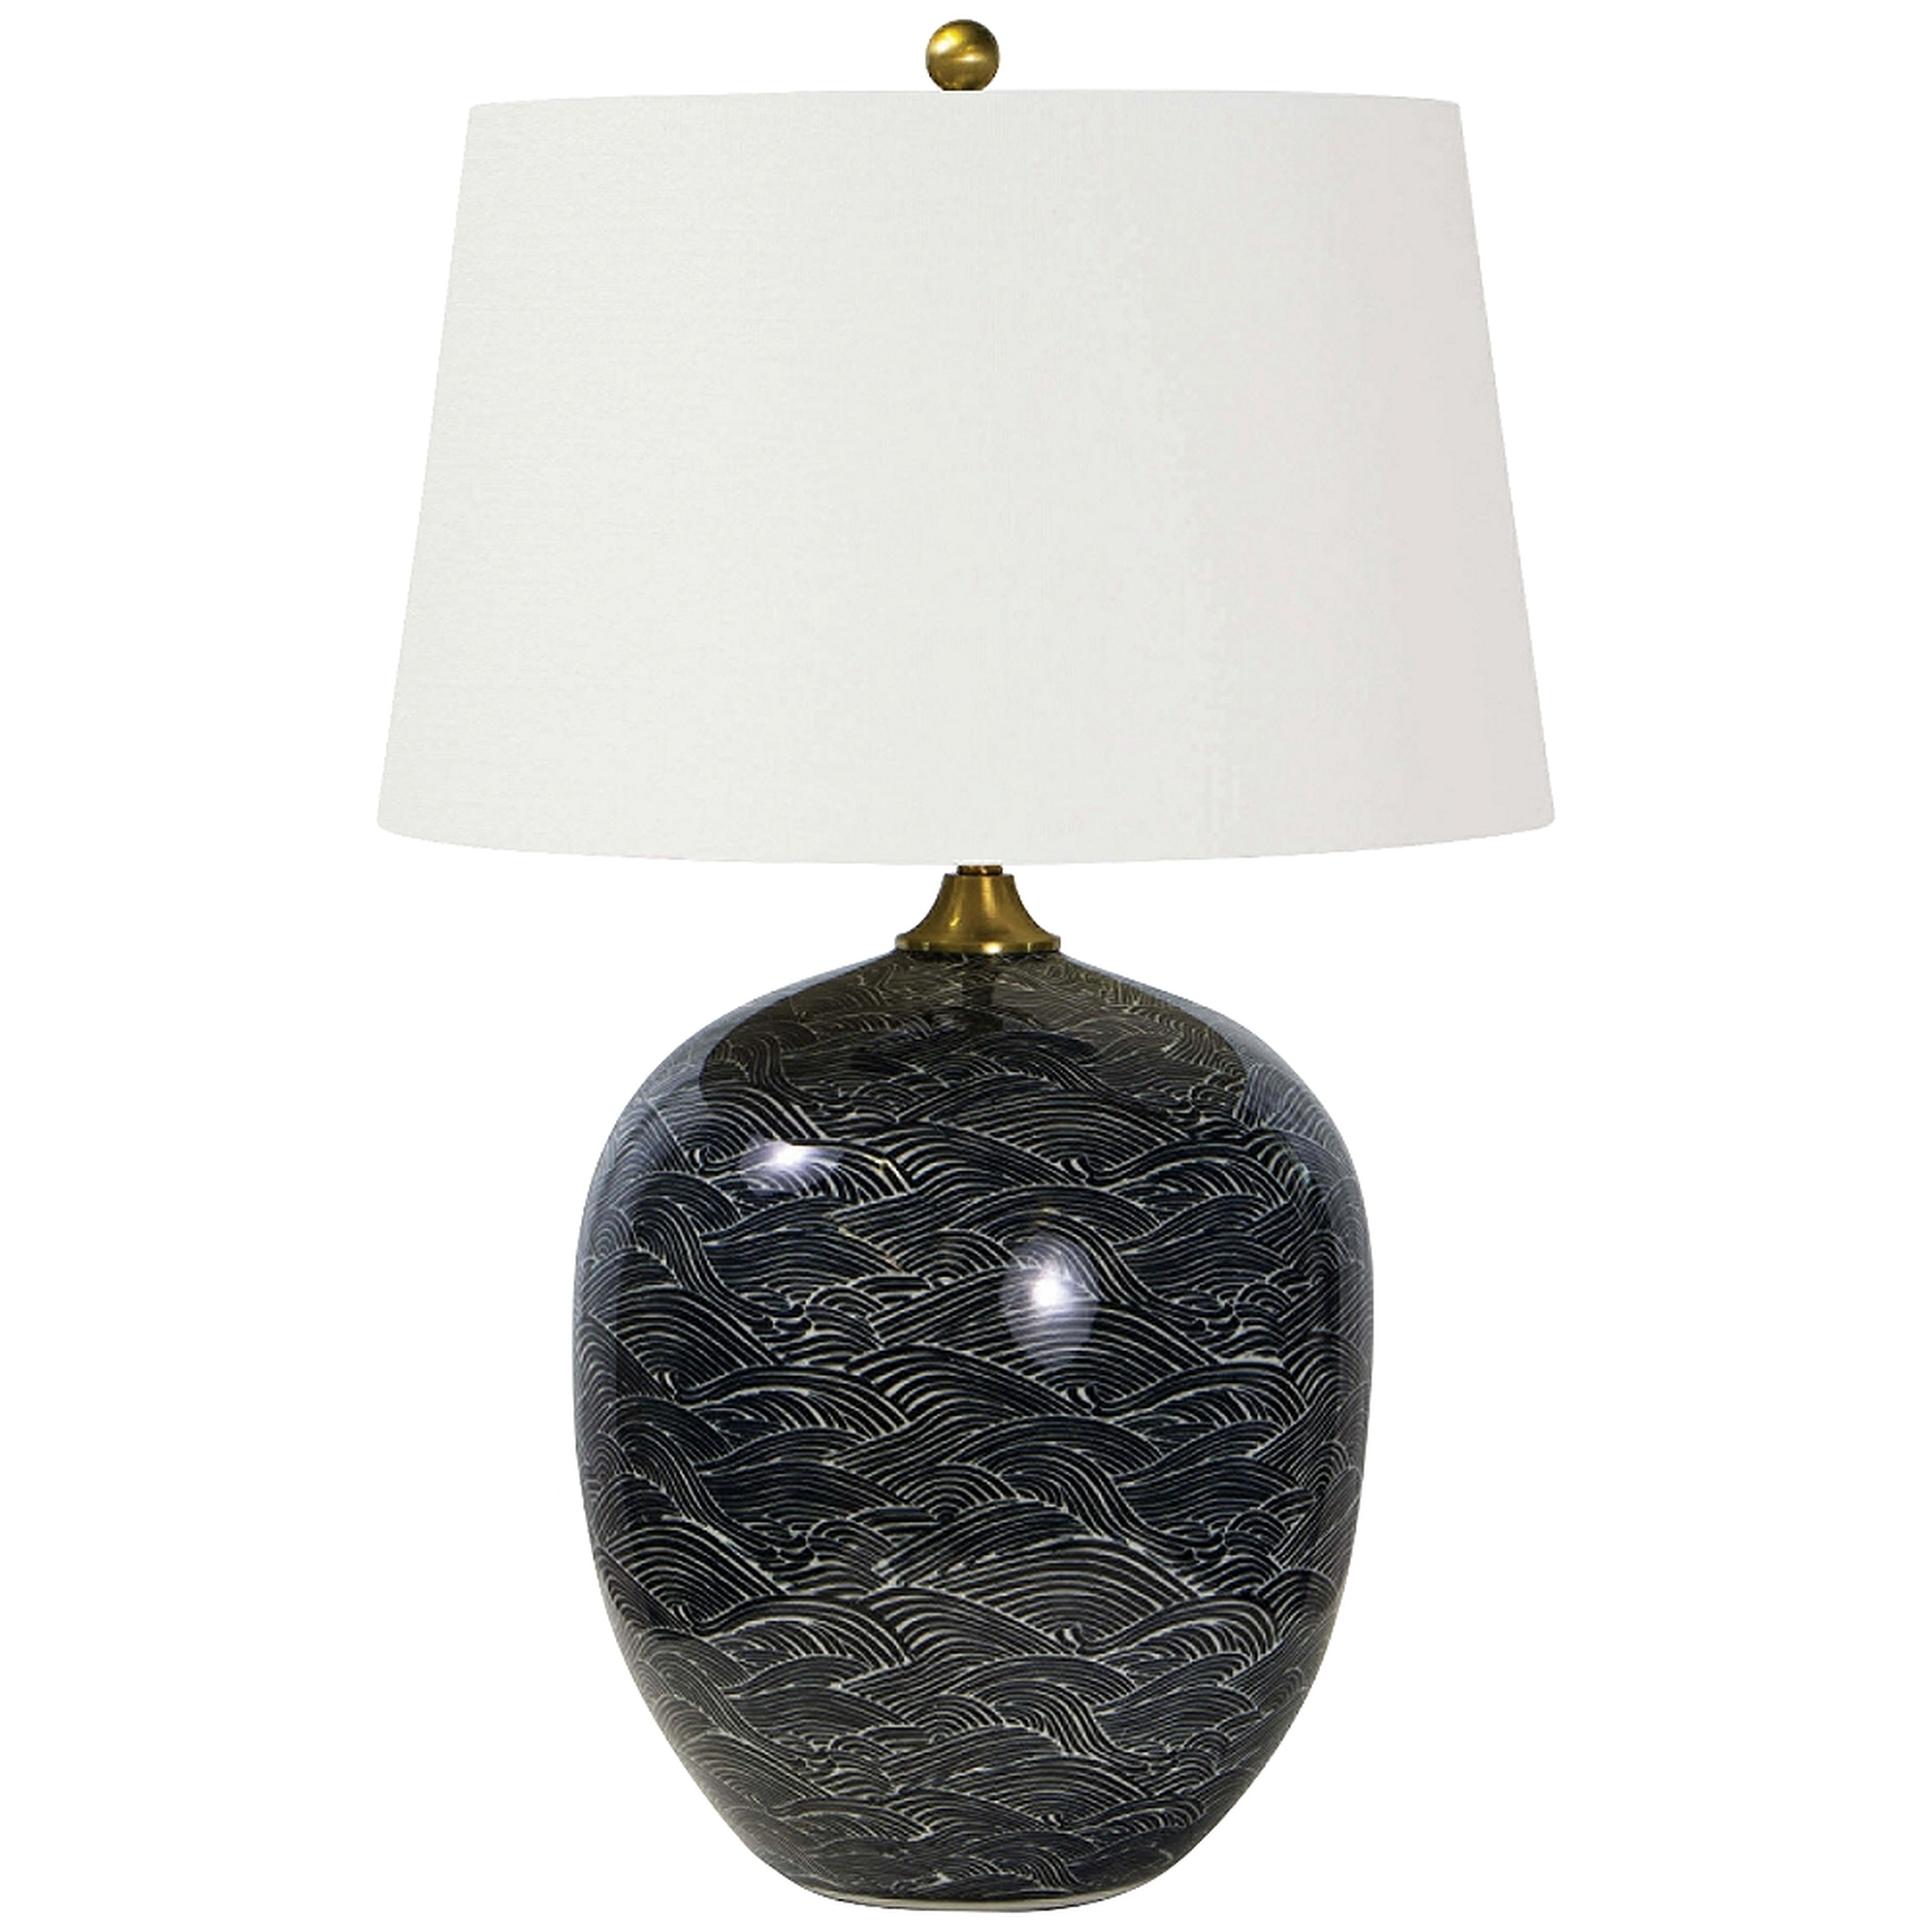 Regina Andrew Design Harbor Ebony Ceramic Table Lamp - Style # 86V35 - Lamps Plus